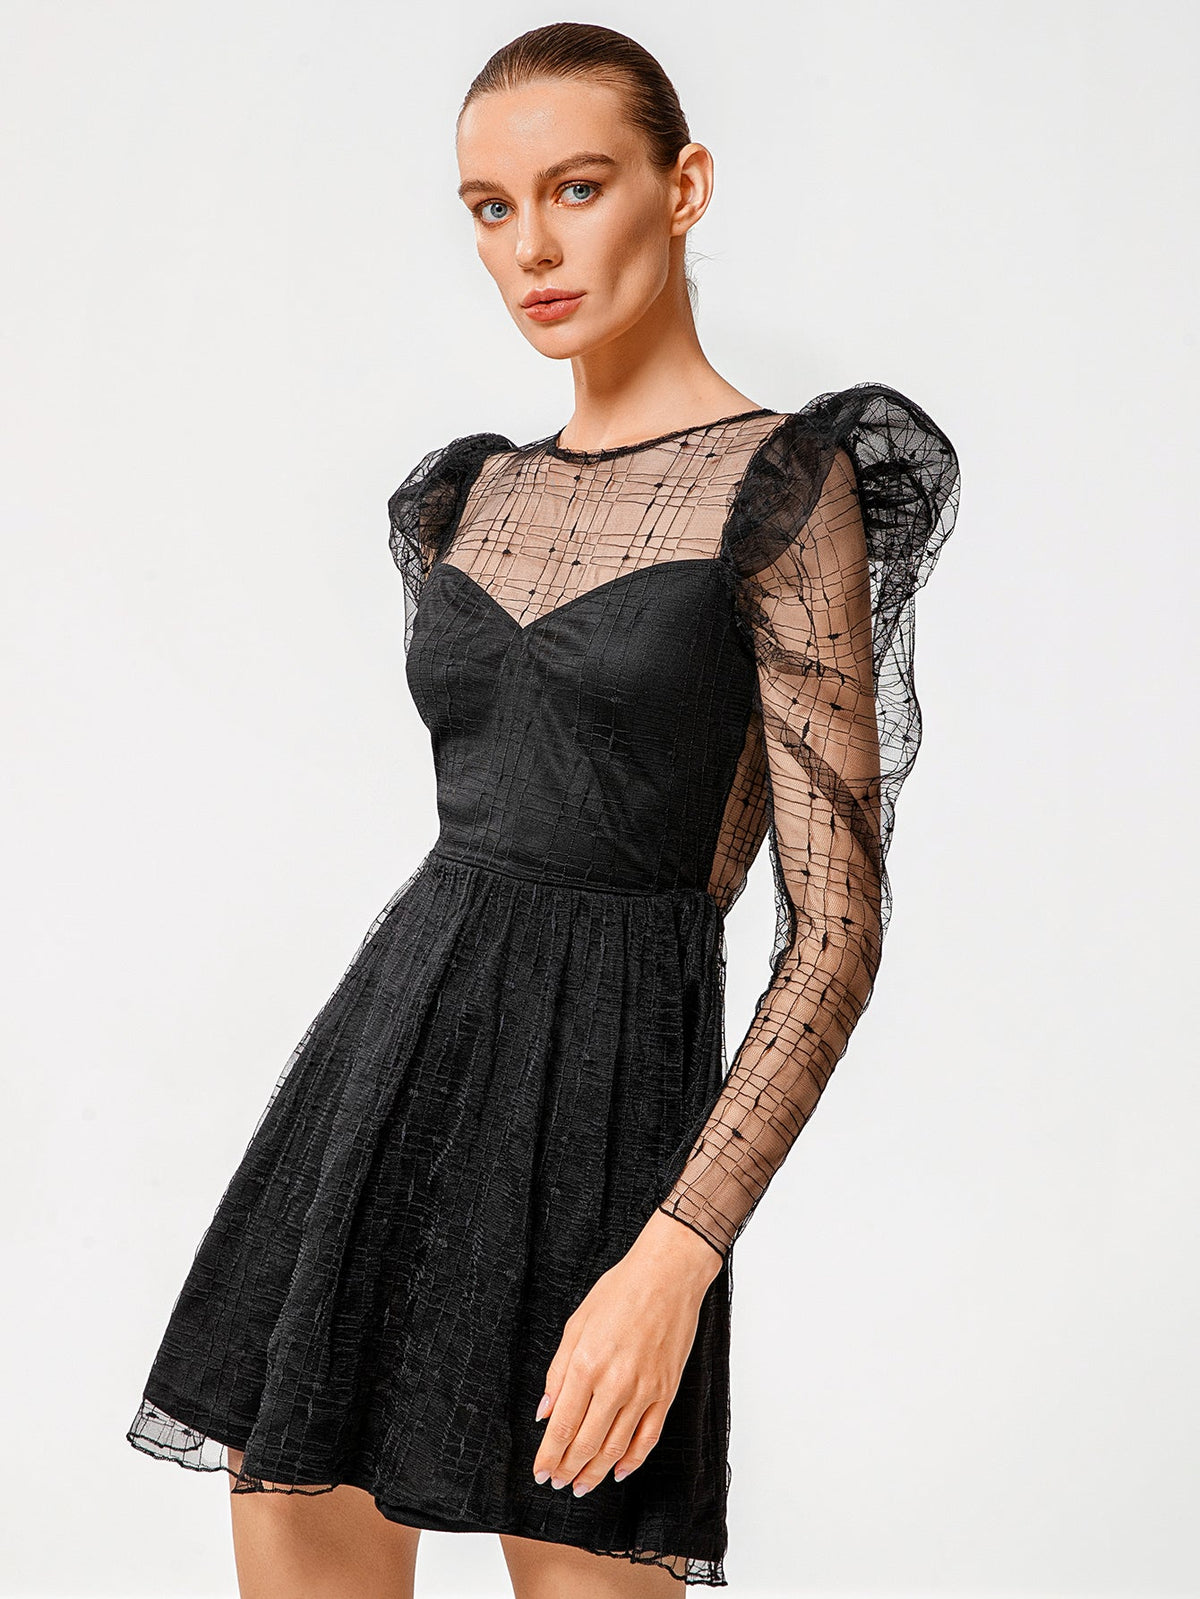 Women Fashion See Through sexy butterfly dot embroidery lace dress short skirt Gigot sleeve dress Sai Feel